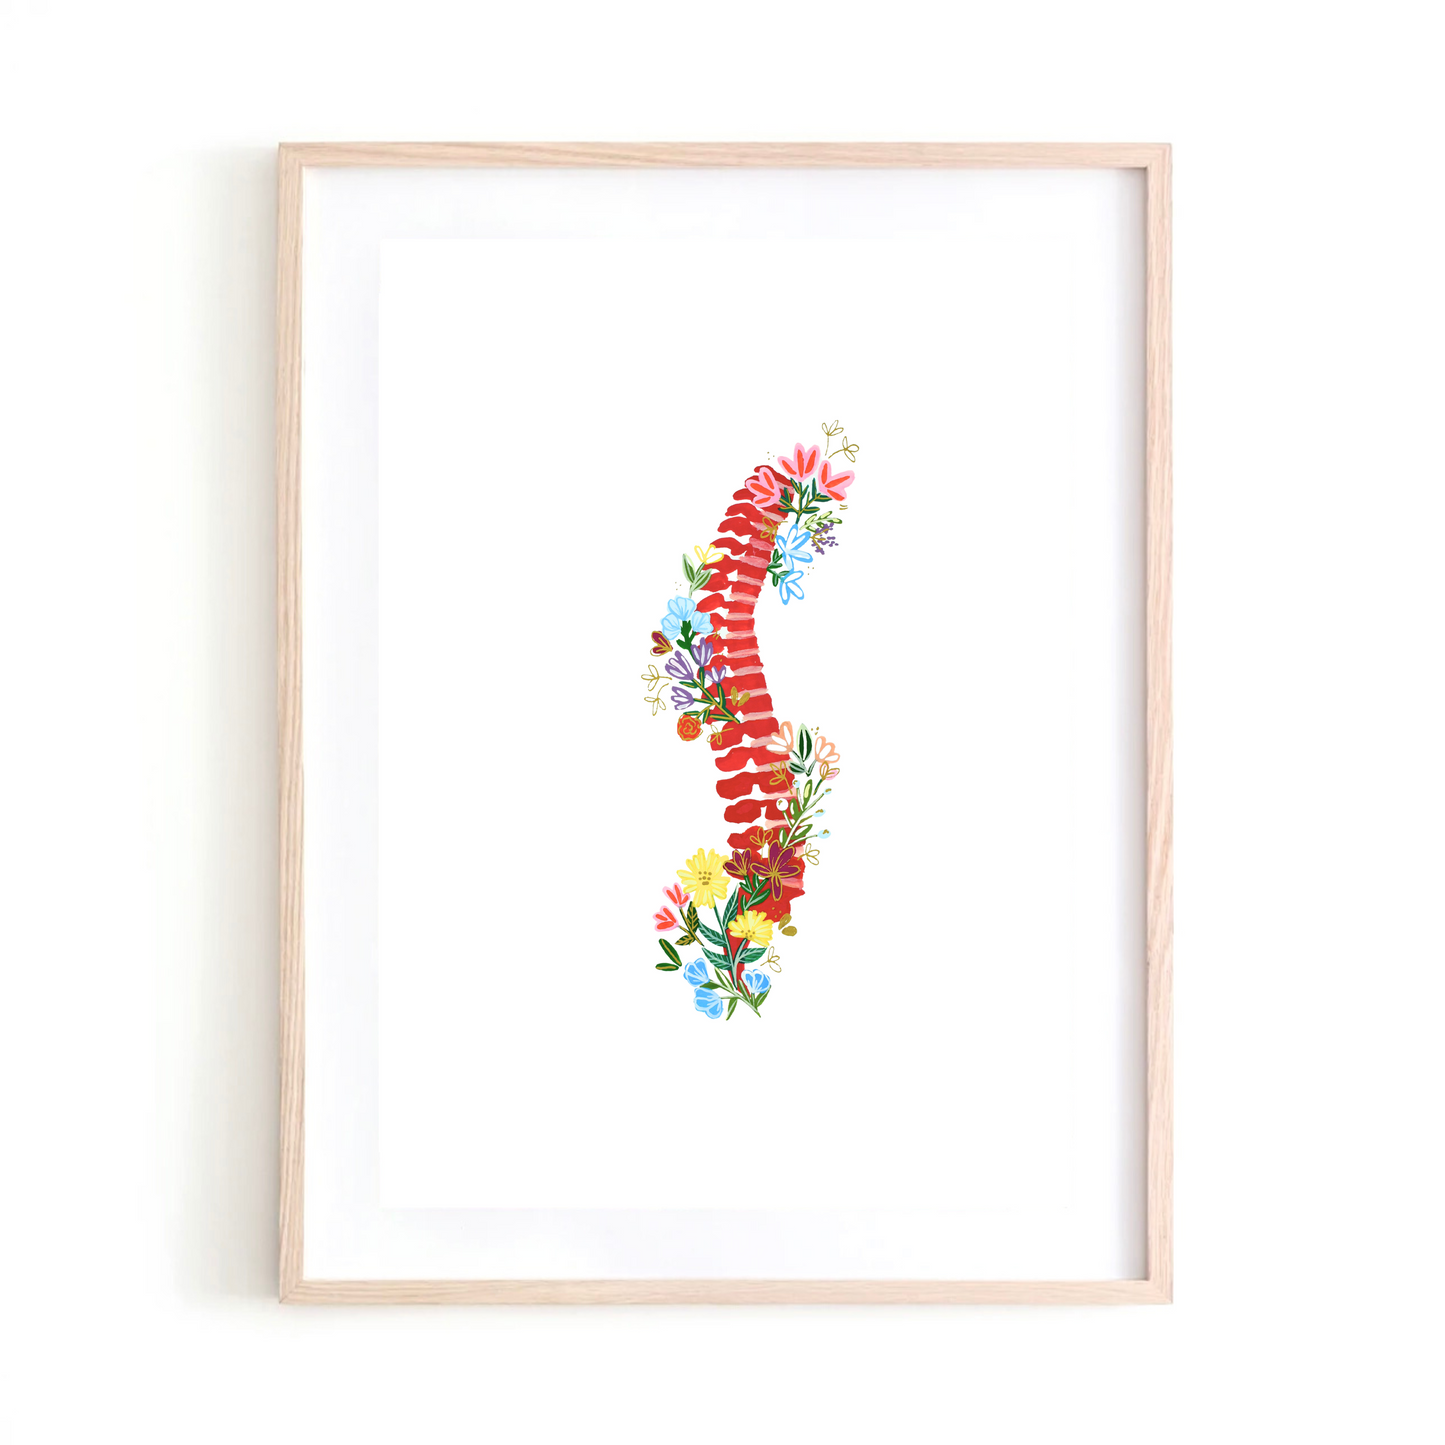 Spine Medicine & Flowers art print